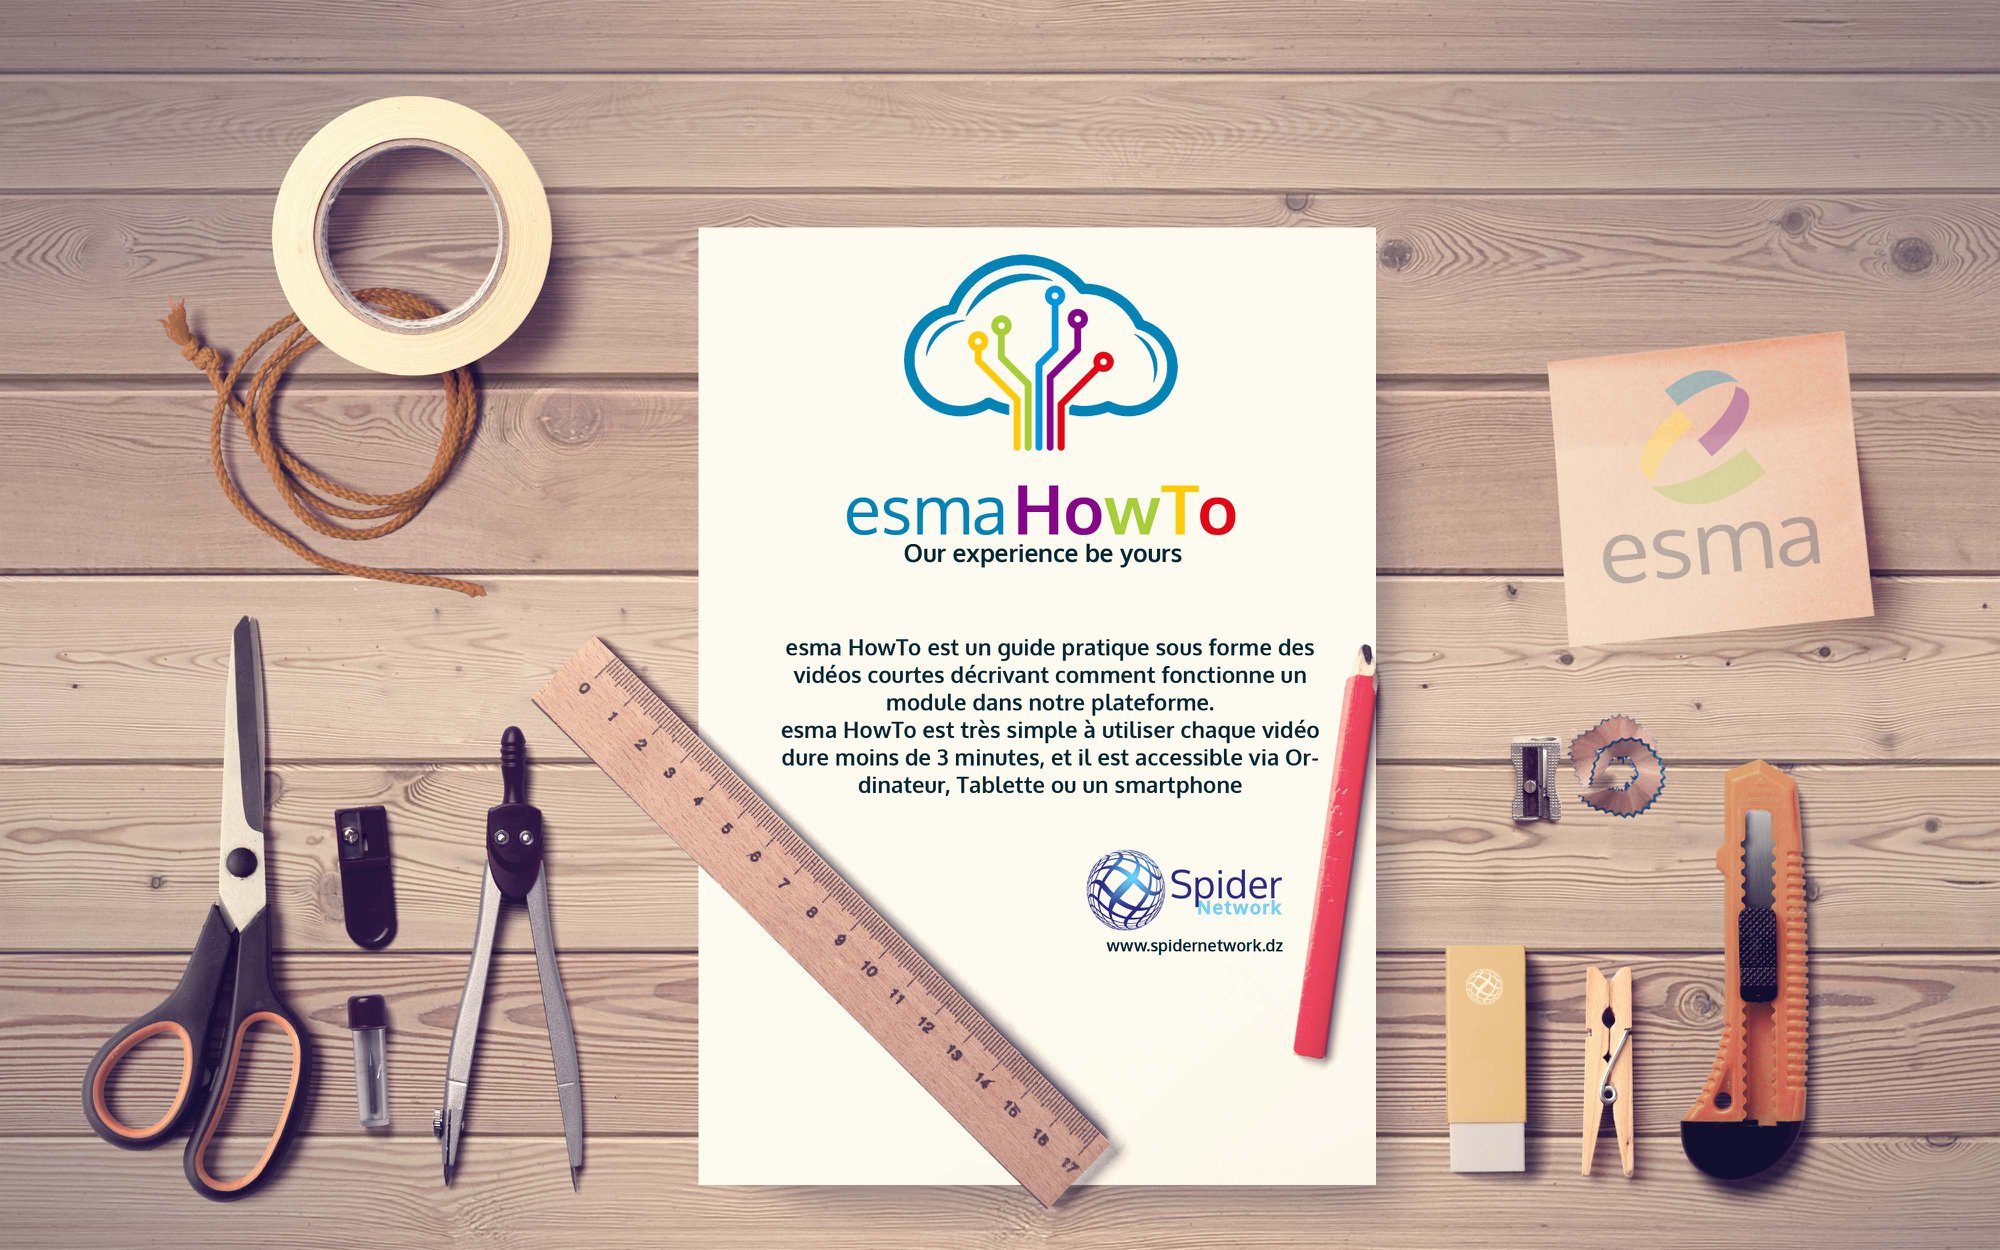 Launch of ESMA HowTO